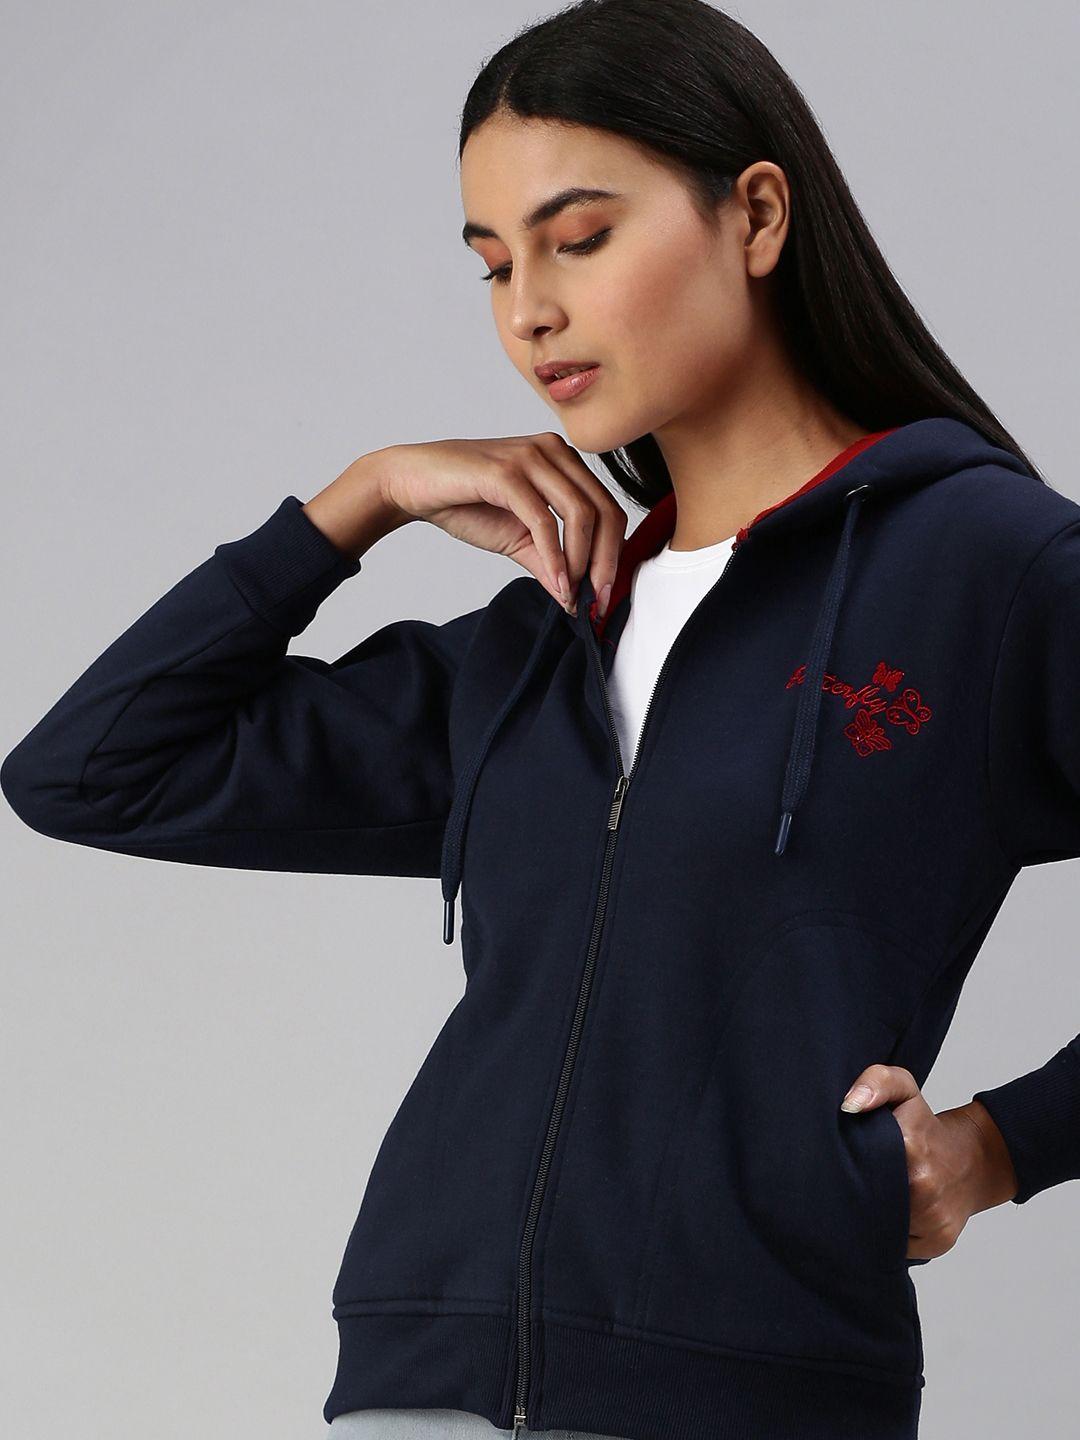 adbucks-women-navy-blue-&-red-embroidered-hooded-pure-cotton-sweatshirt